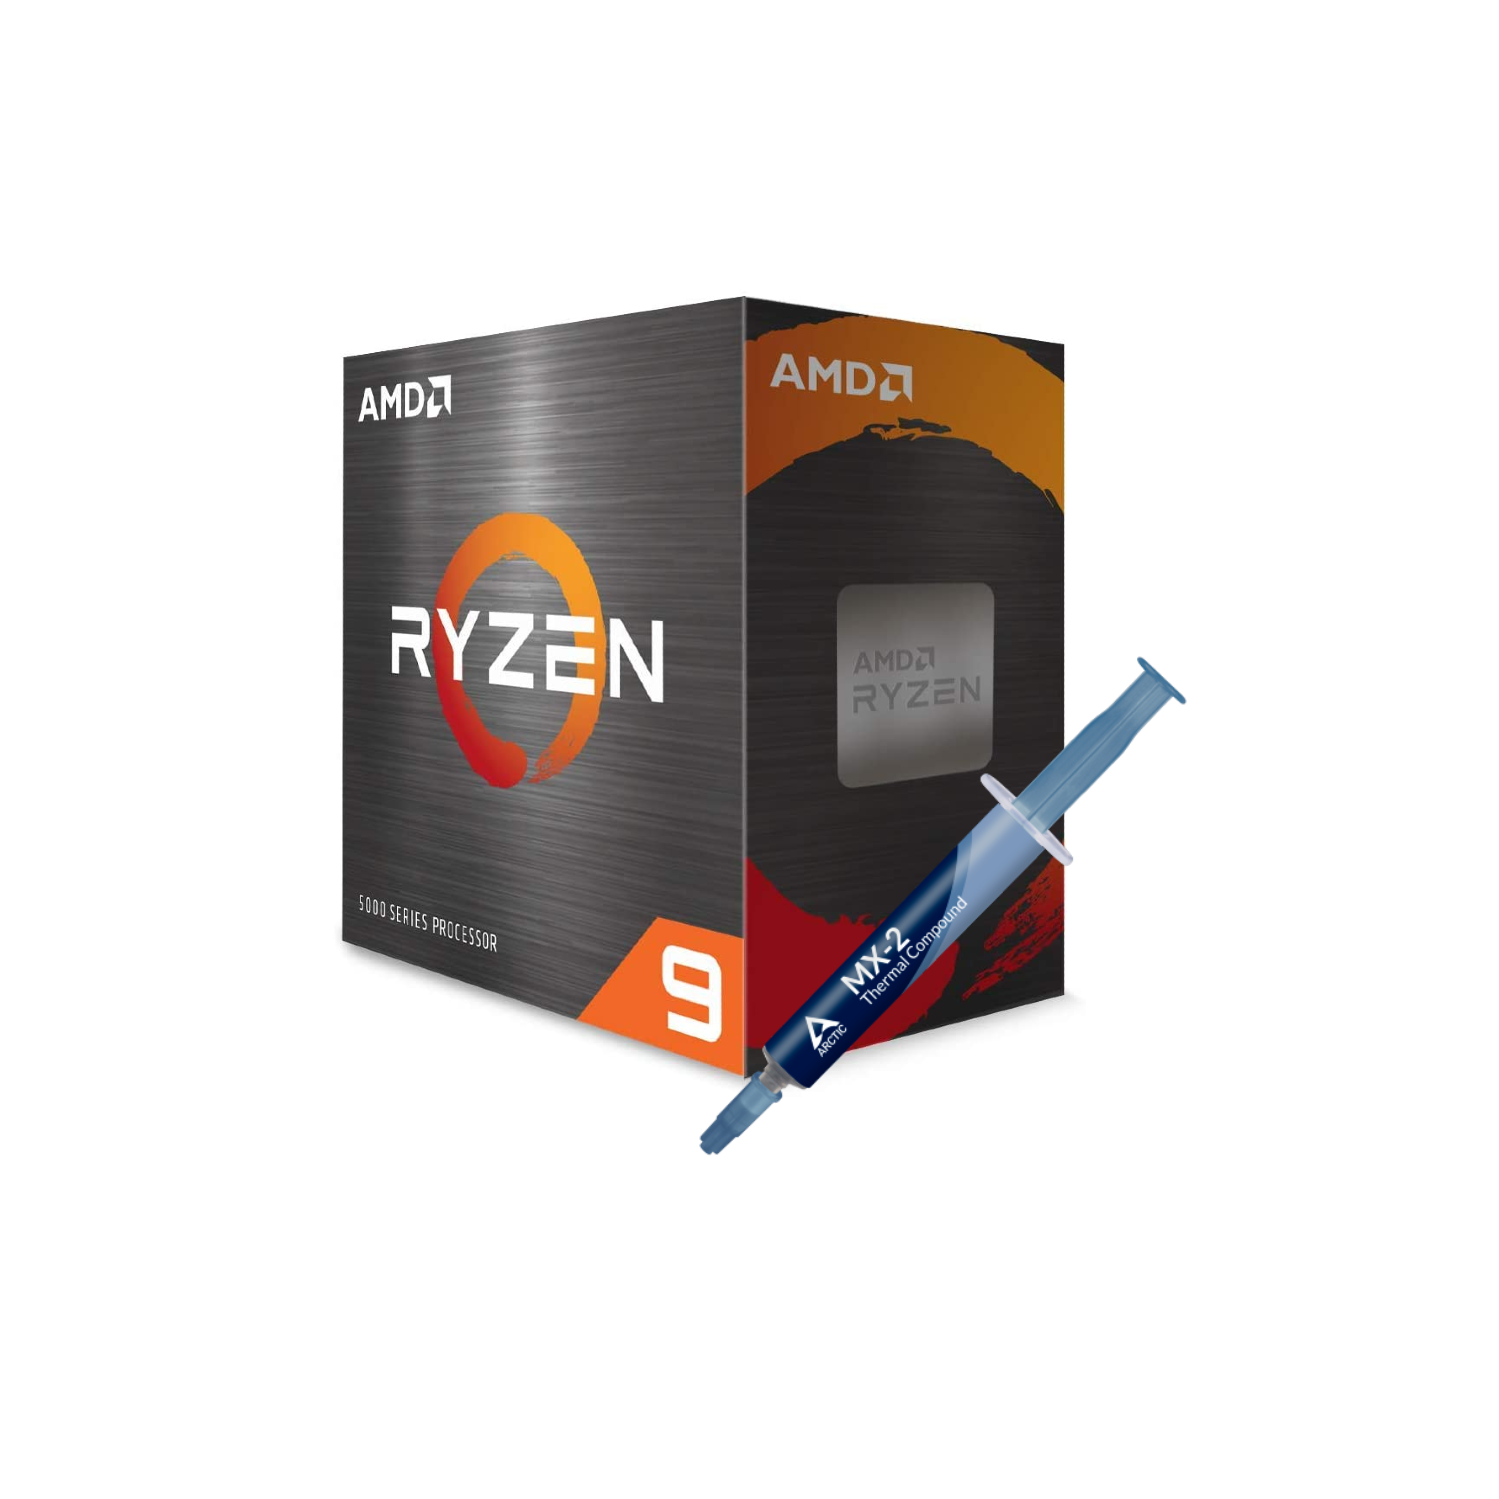 AMD Ryzen 9 5950X 4th Gen 16-core, 32-threads Unlocked Desktop Processor Without Cooler + Arctic MX-2 Thermal Compound 4g